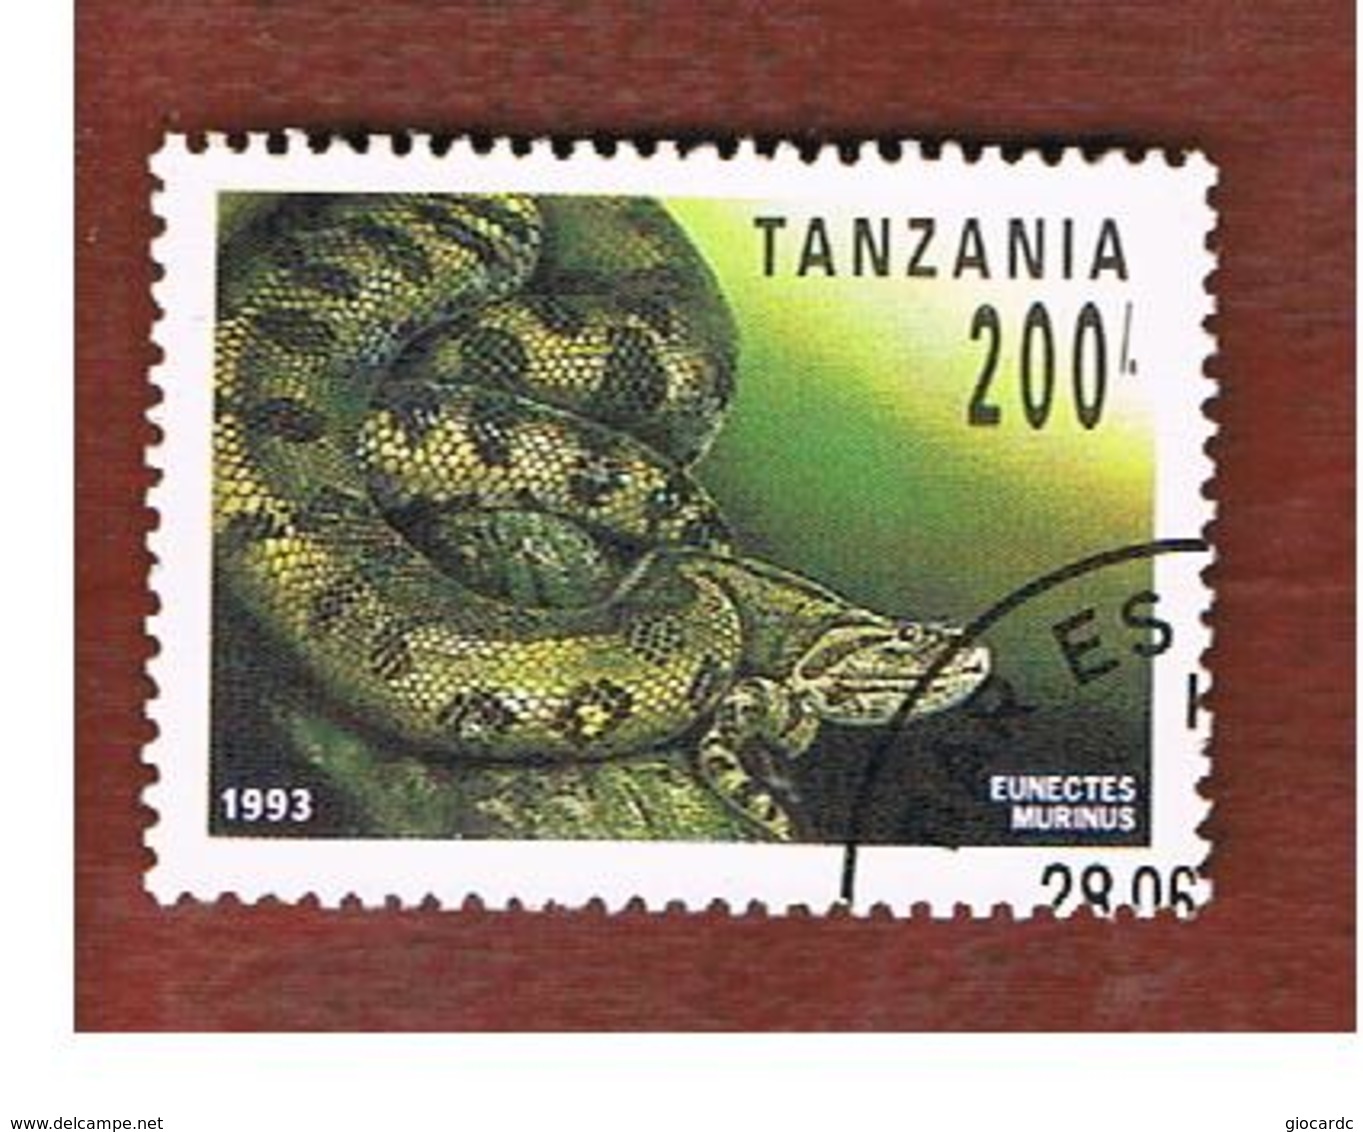 TANZANIA  -  SG 1533  -    1993  COMMON ANACONDA          - USED ° - Tanzania (1964-...)